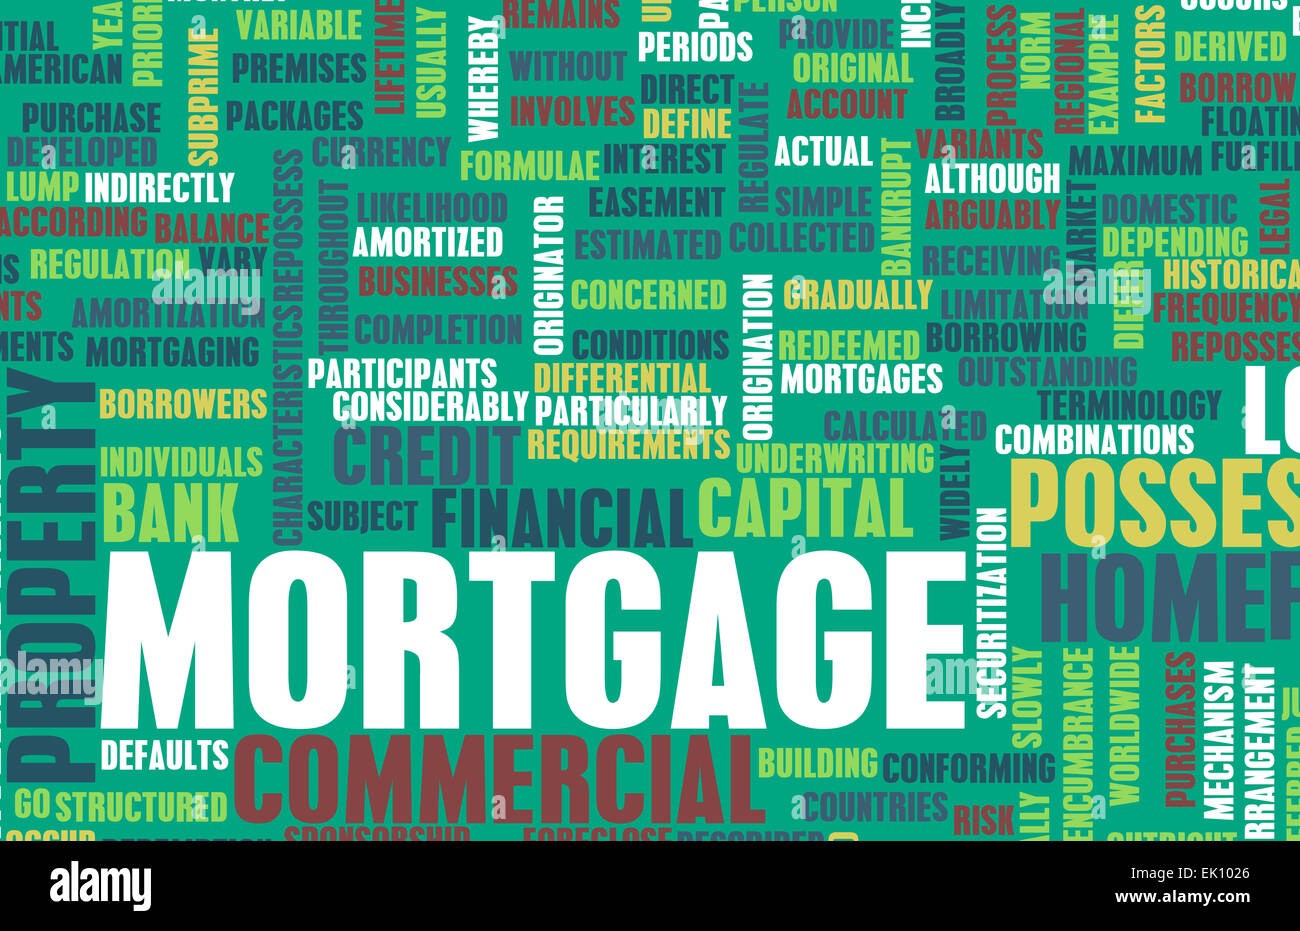 Mortgage Financial Home Loan as a Concept Stock Photo